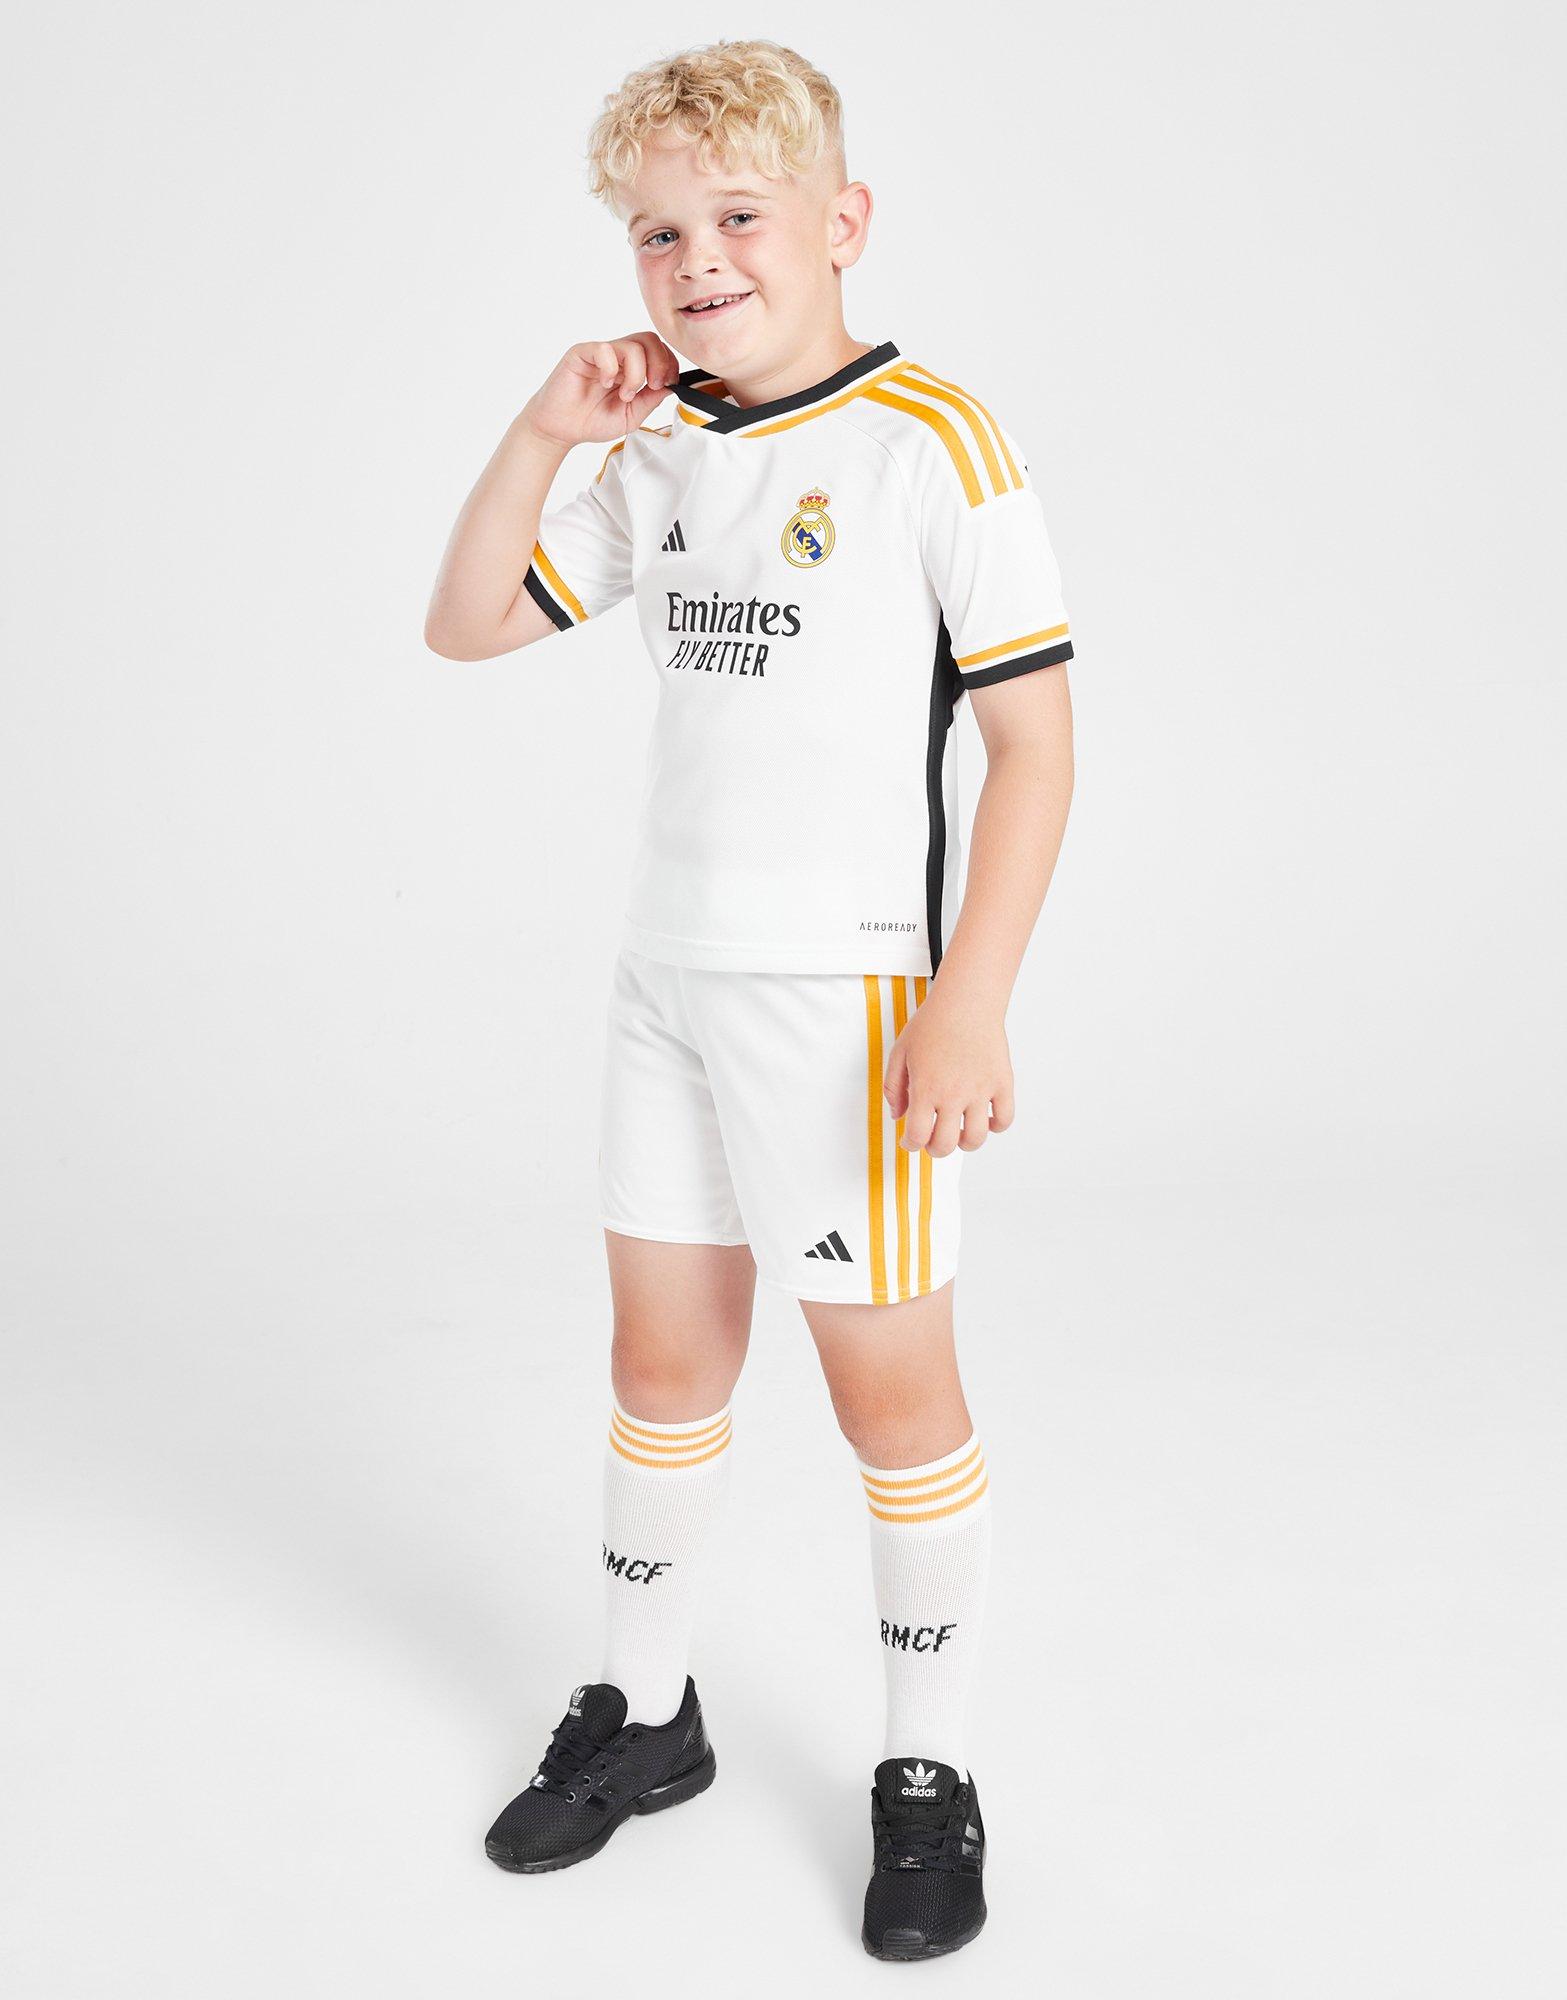 Football - Real Madrid - Accessories - JD Sports Global